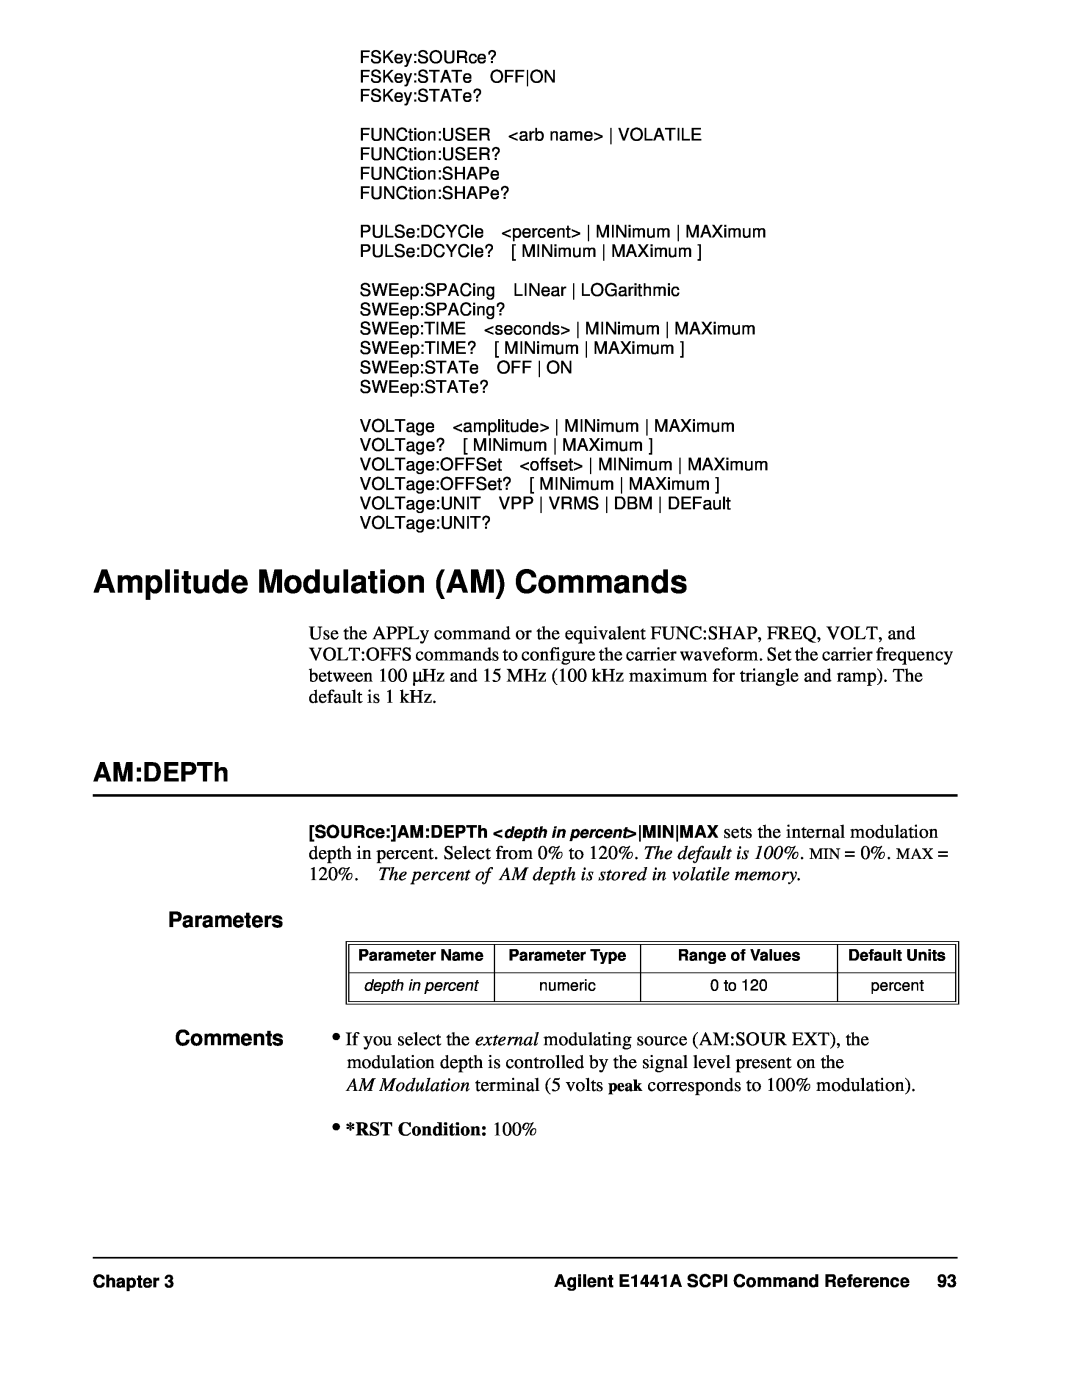 Agilent Technologies E1441A user service Amplitude Modulation AM Commands, AM:DEPTh, Parameters, •*RST Condition: 100% 